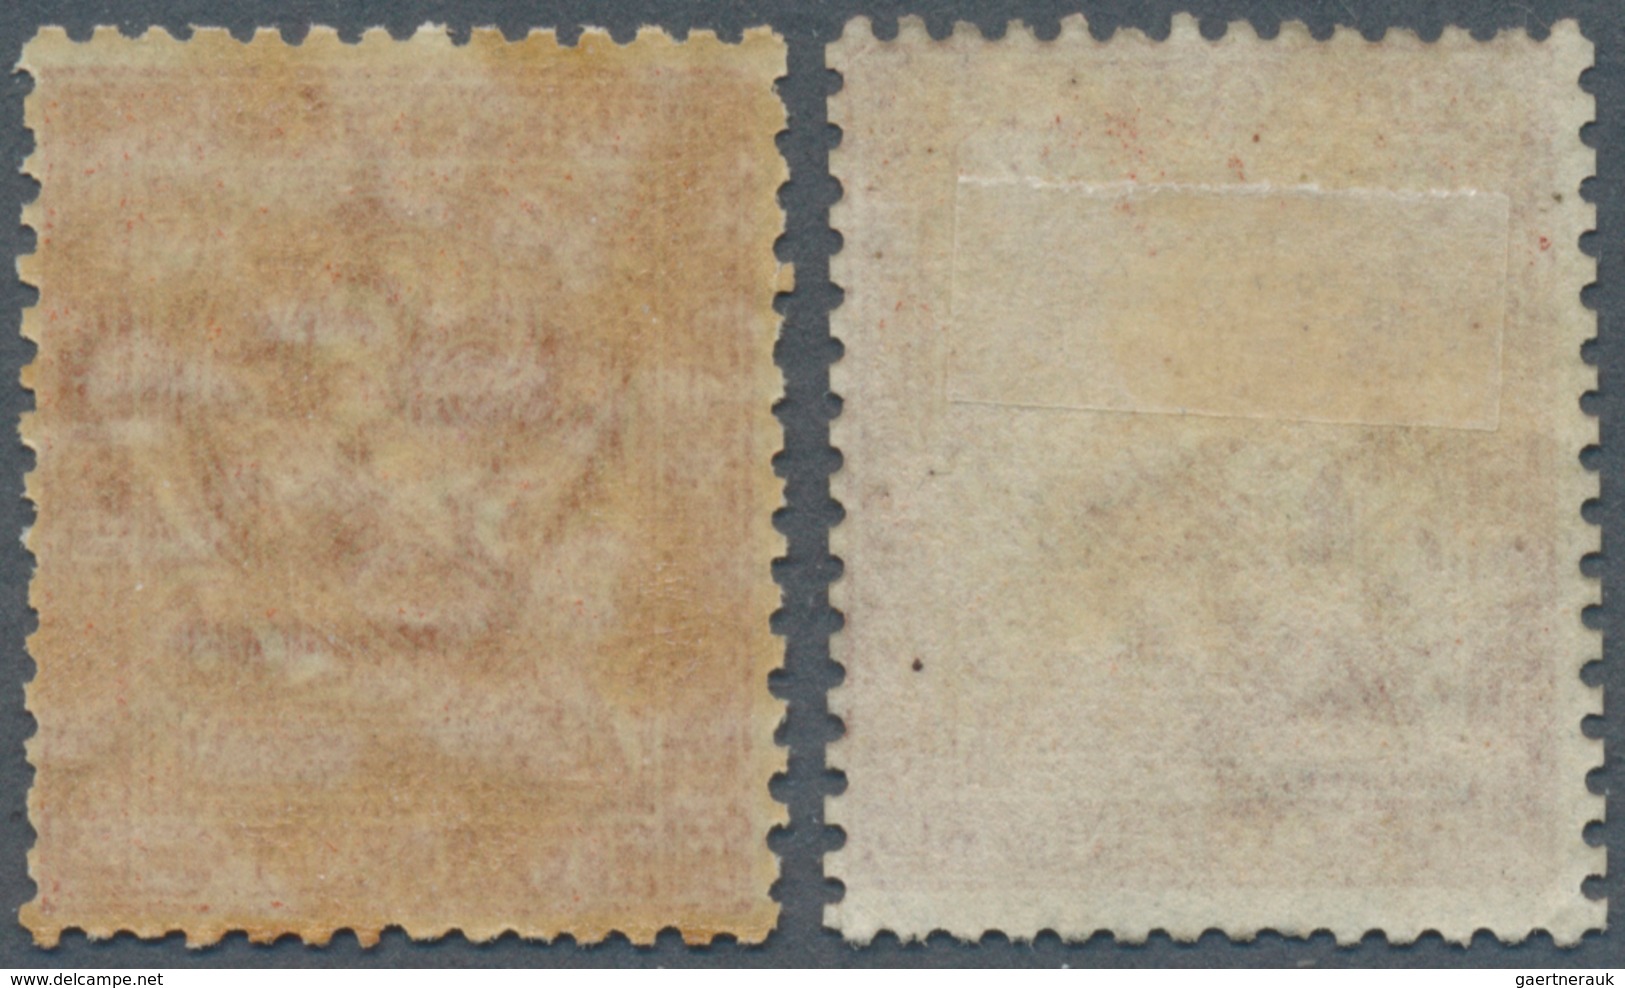 Italien: 1863/1865: 2 Cent Red Brown "De La Rue", London Printing, Mint Hinged, Slightly Decentered - Ongebruikt